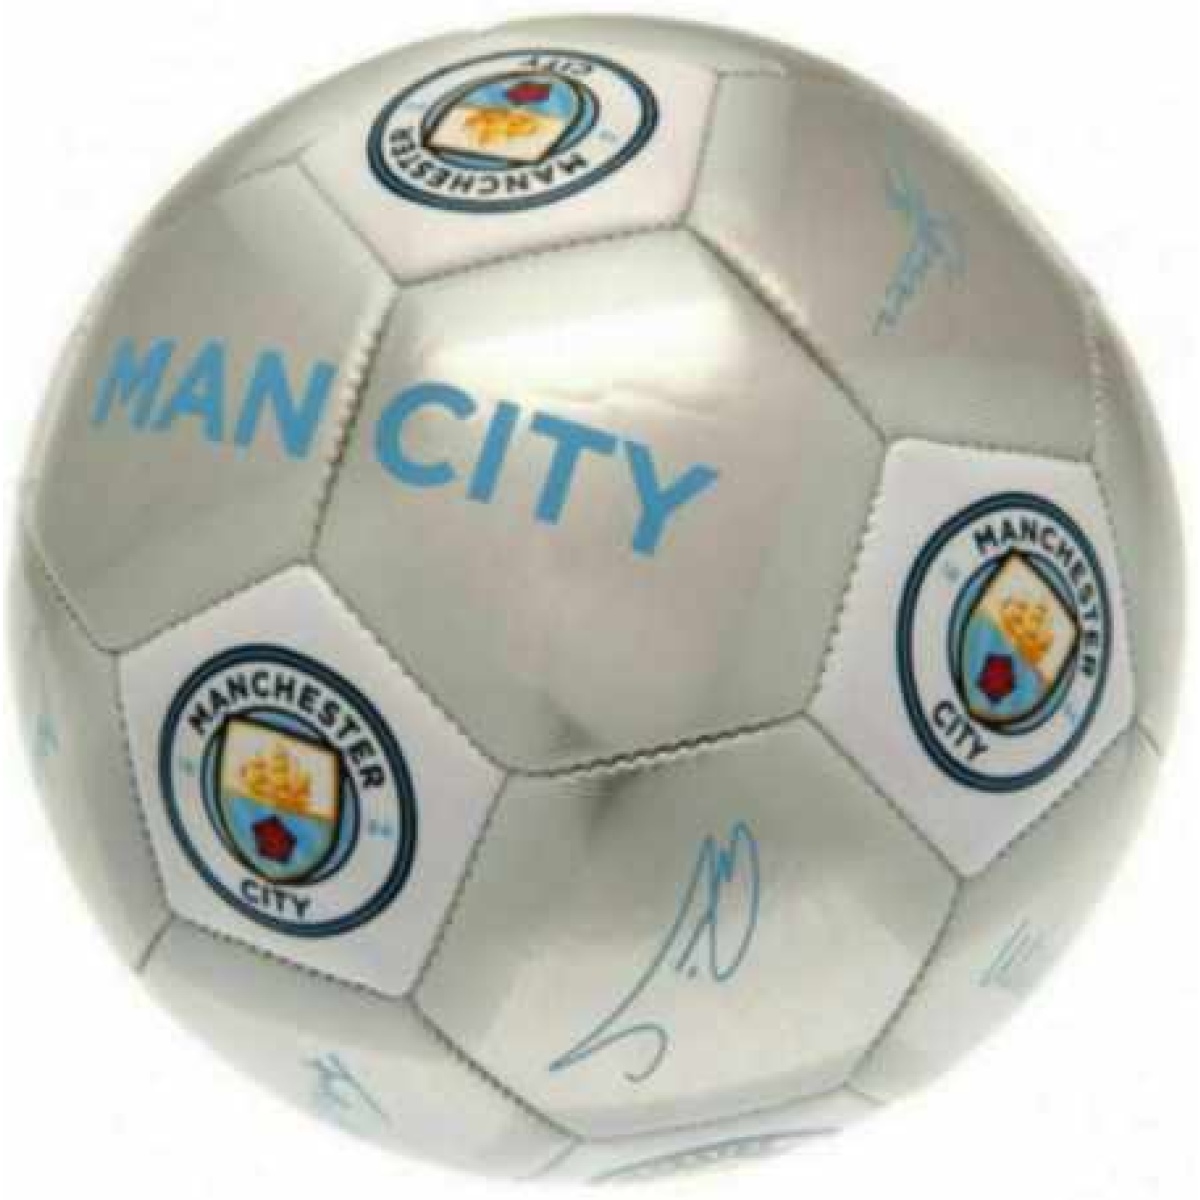 Man City Signature Football, Football Souvenirs, Souvenirs